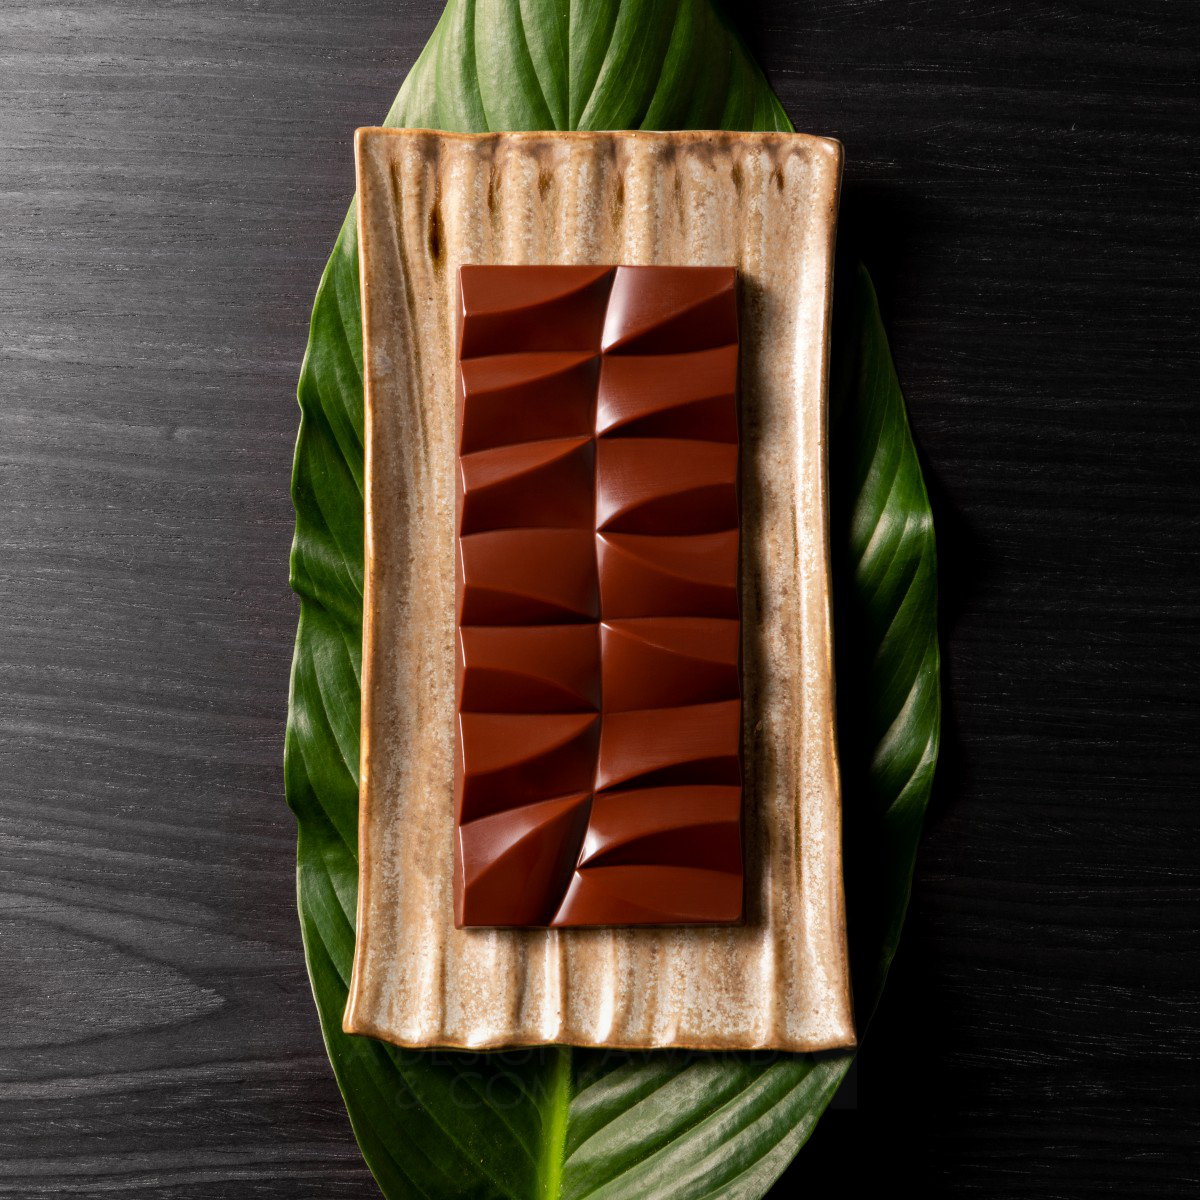 Dengo Chocolate Bar by Brazil & Murgel